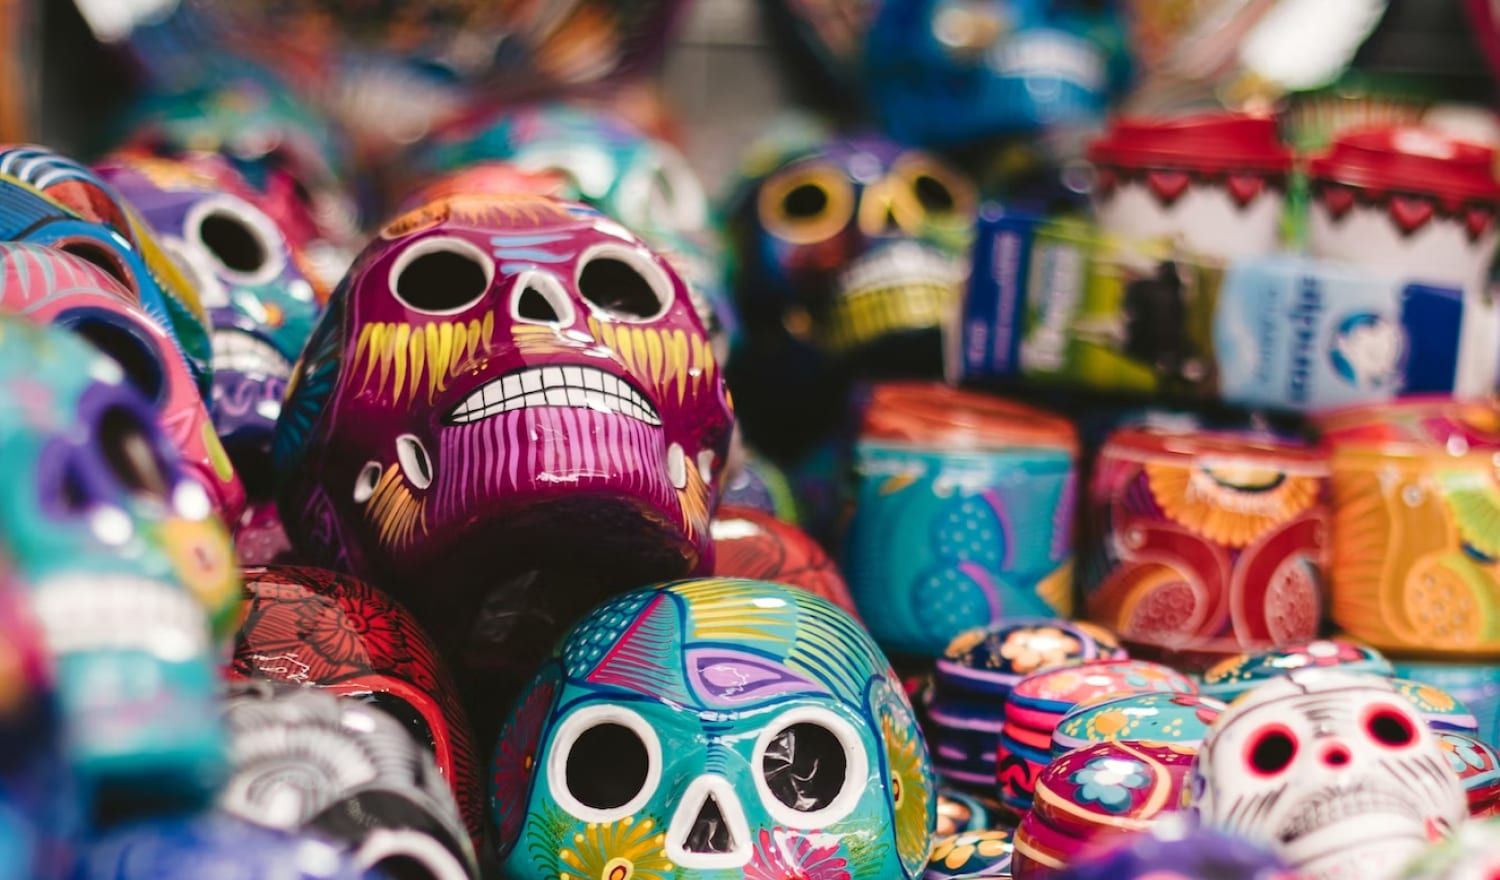 Ceremonial skulls hand-crafted in Oaxaca.